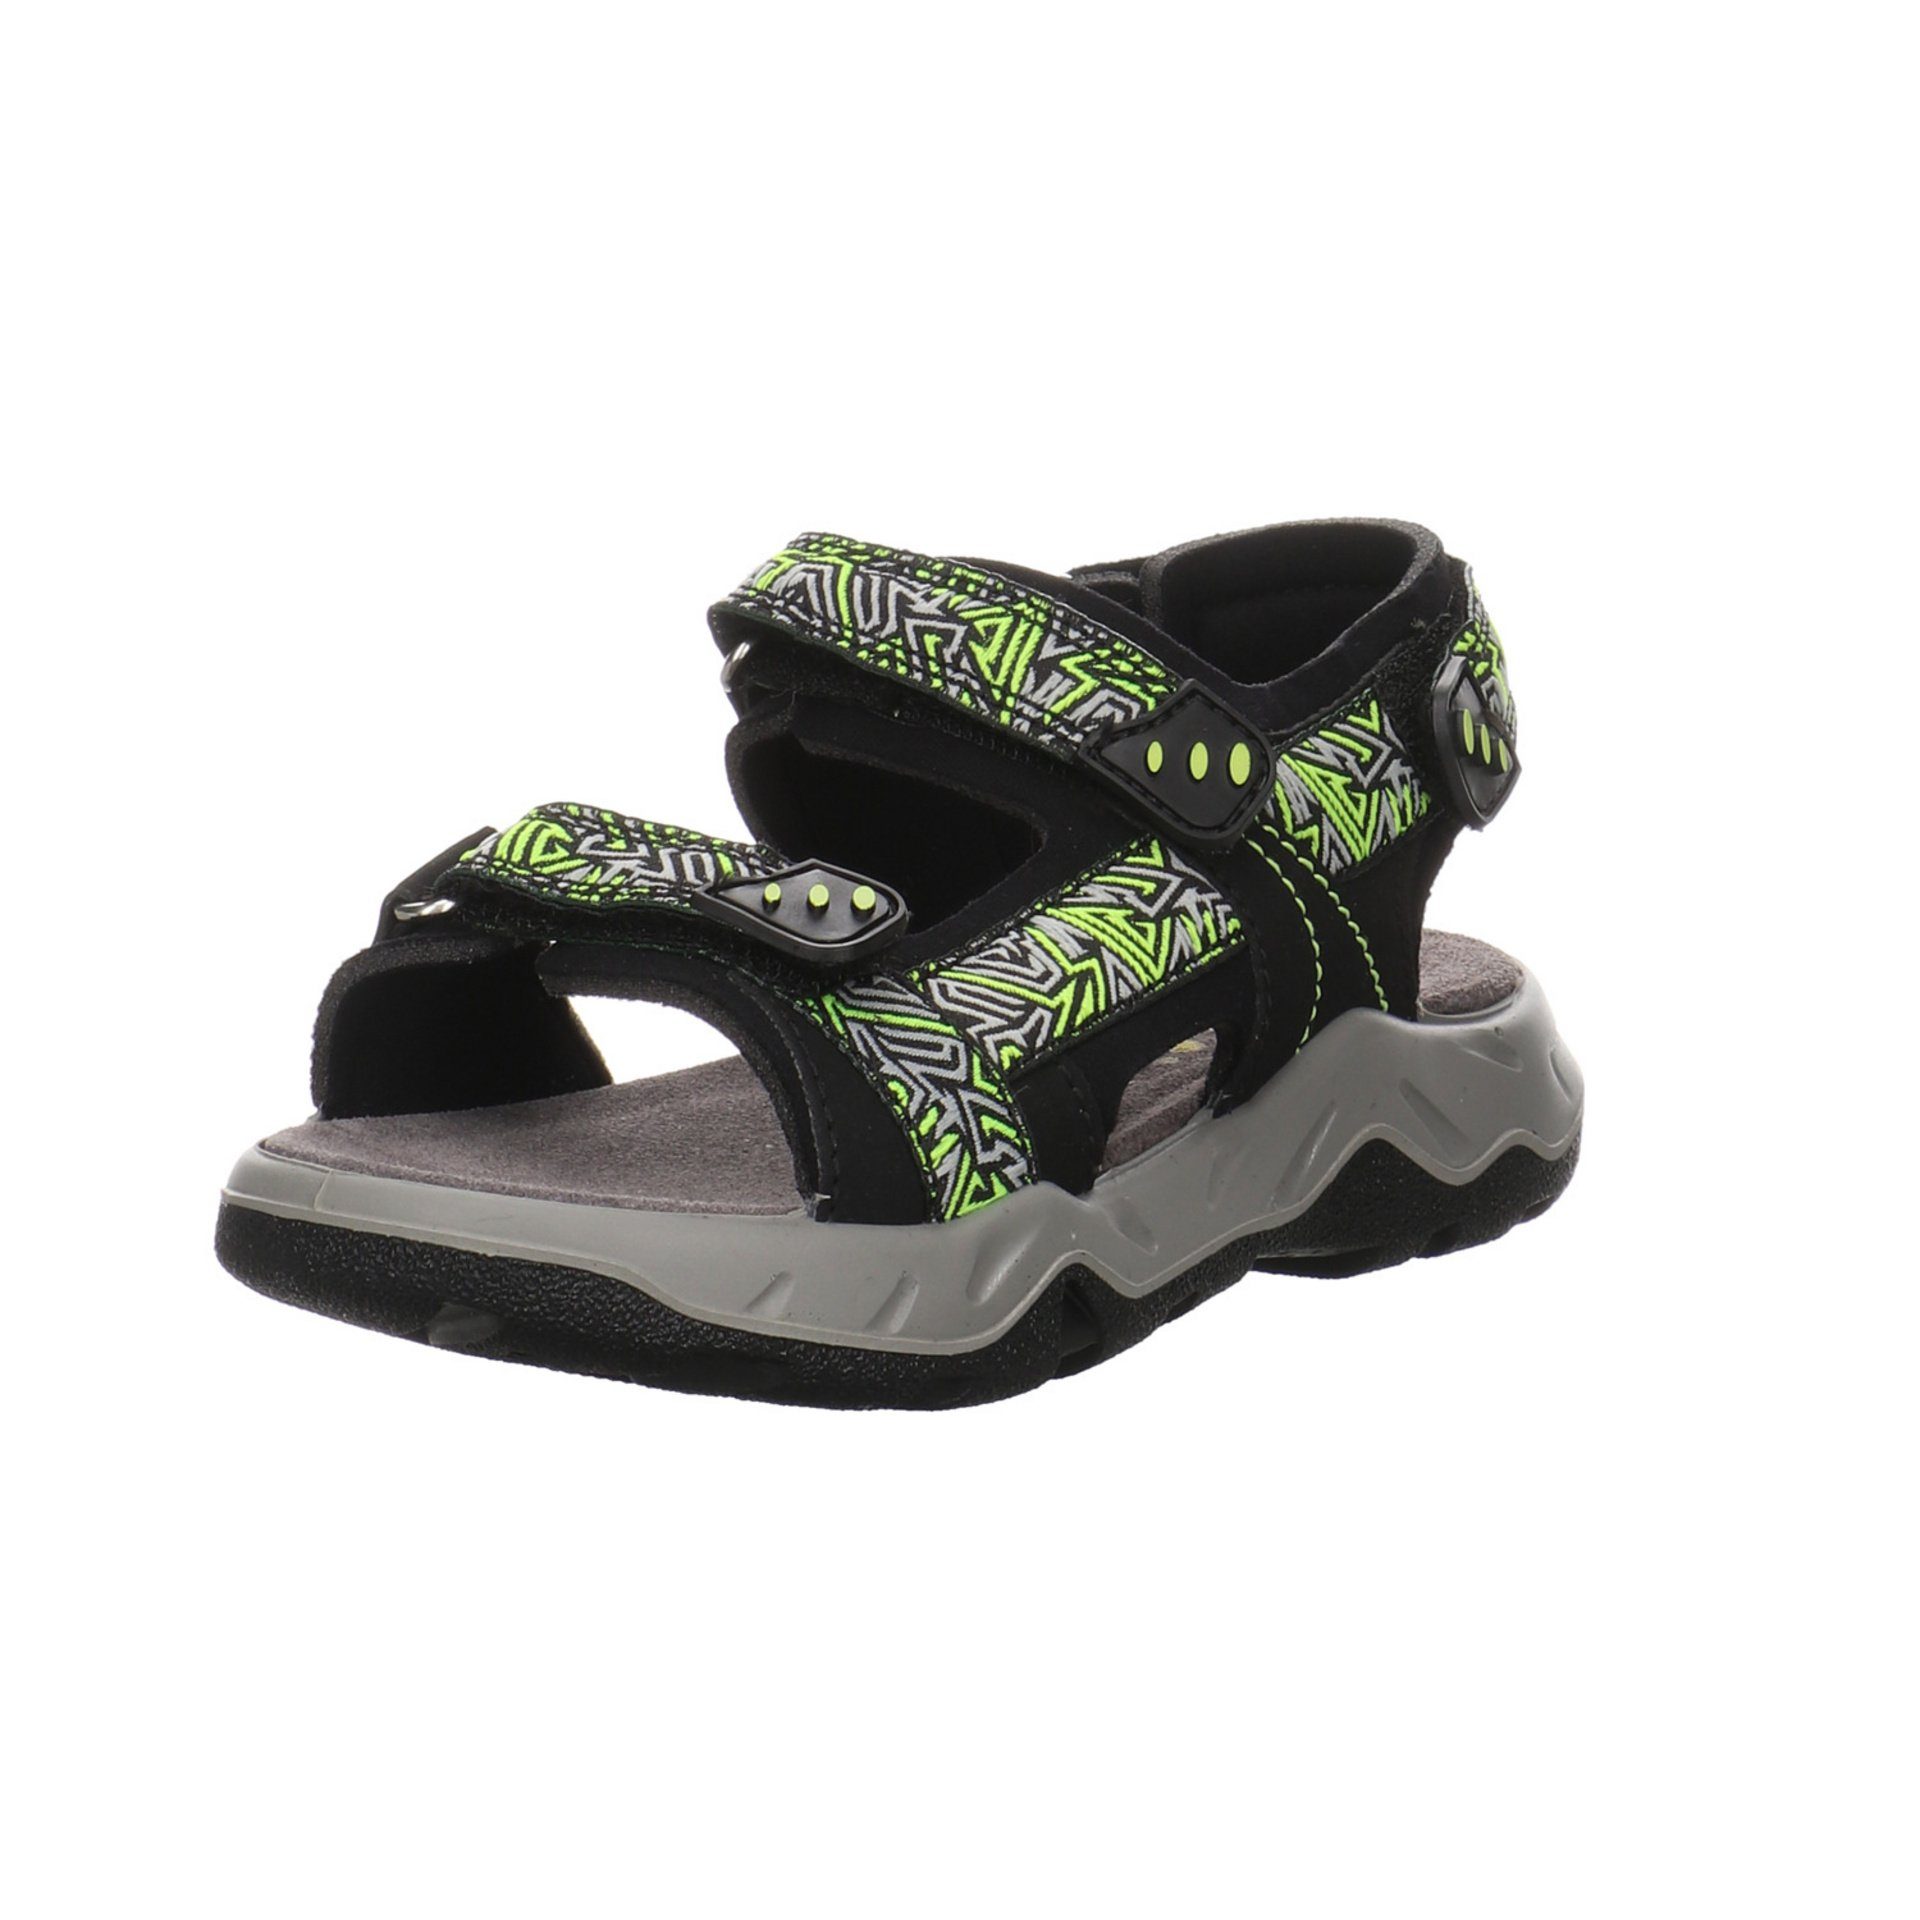 Salamander Lurchi Jungen Sandalen Schuhe Odono Sandale Kinderschuhe Sandale Synthetikkombination Black Multi